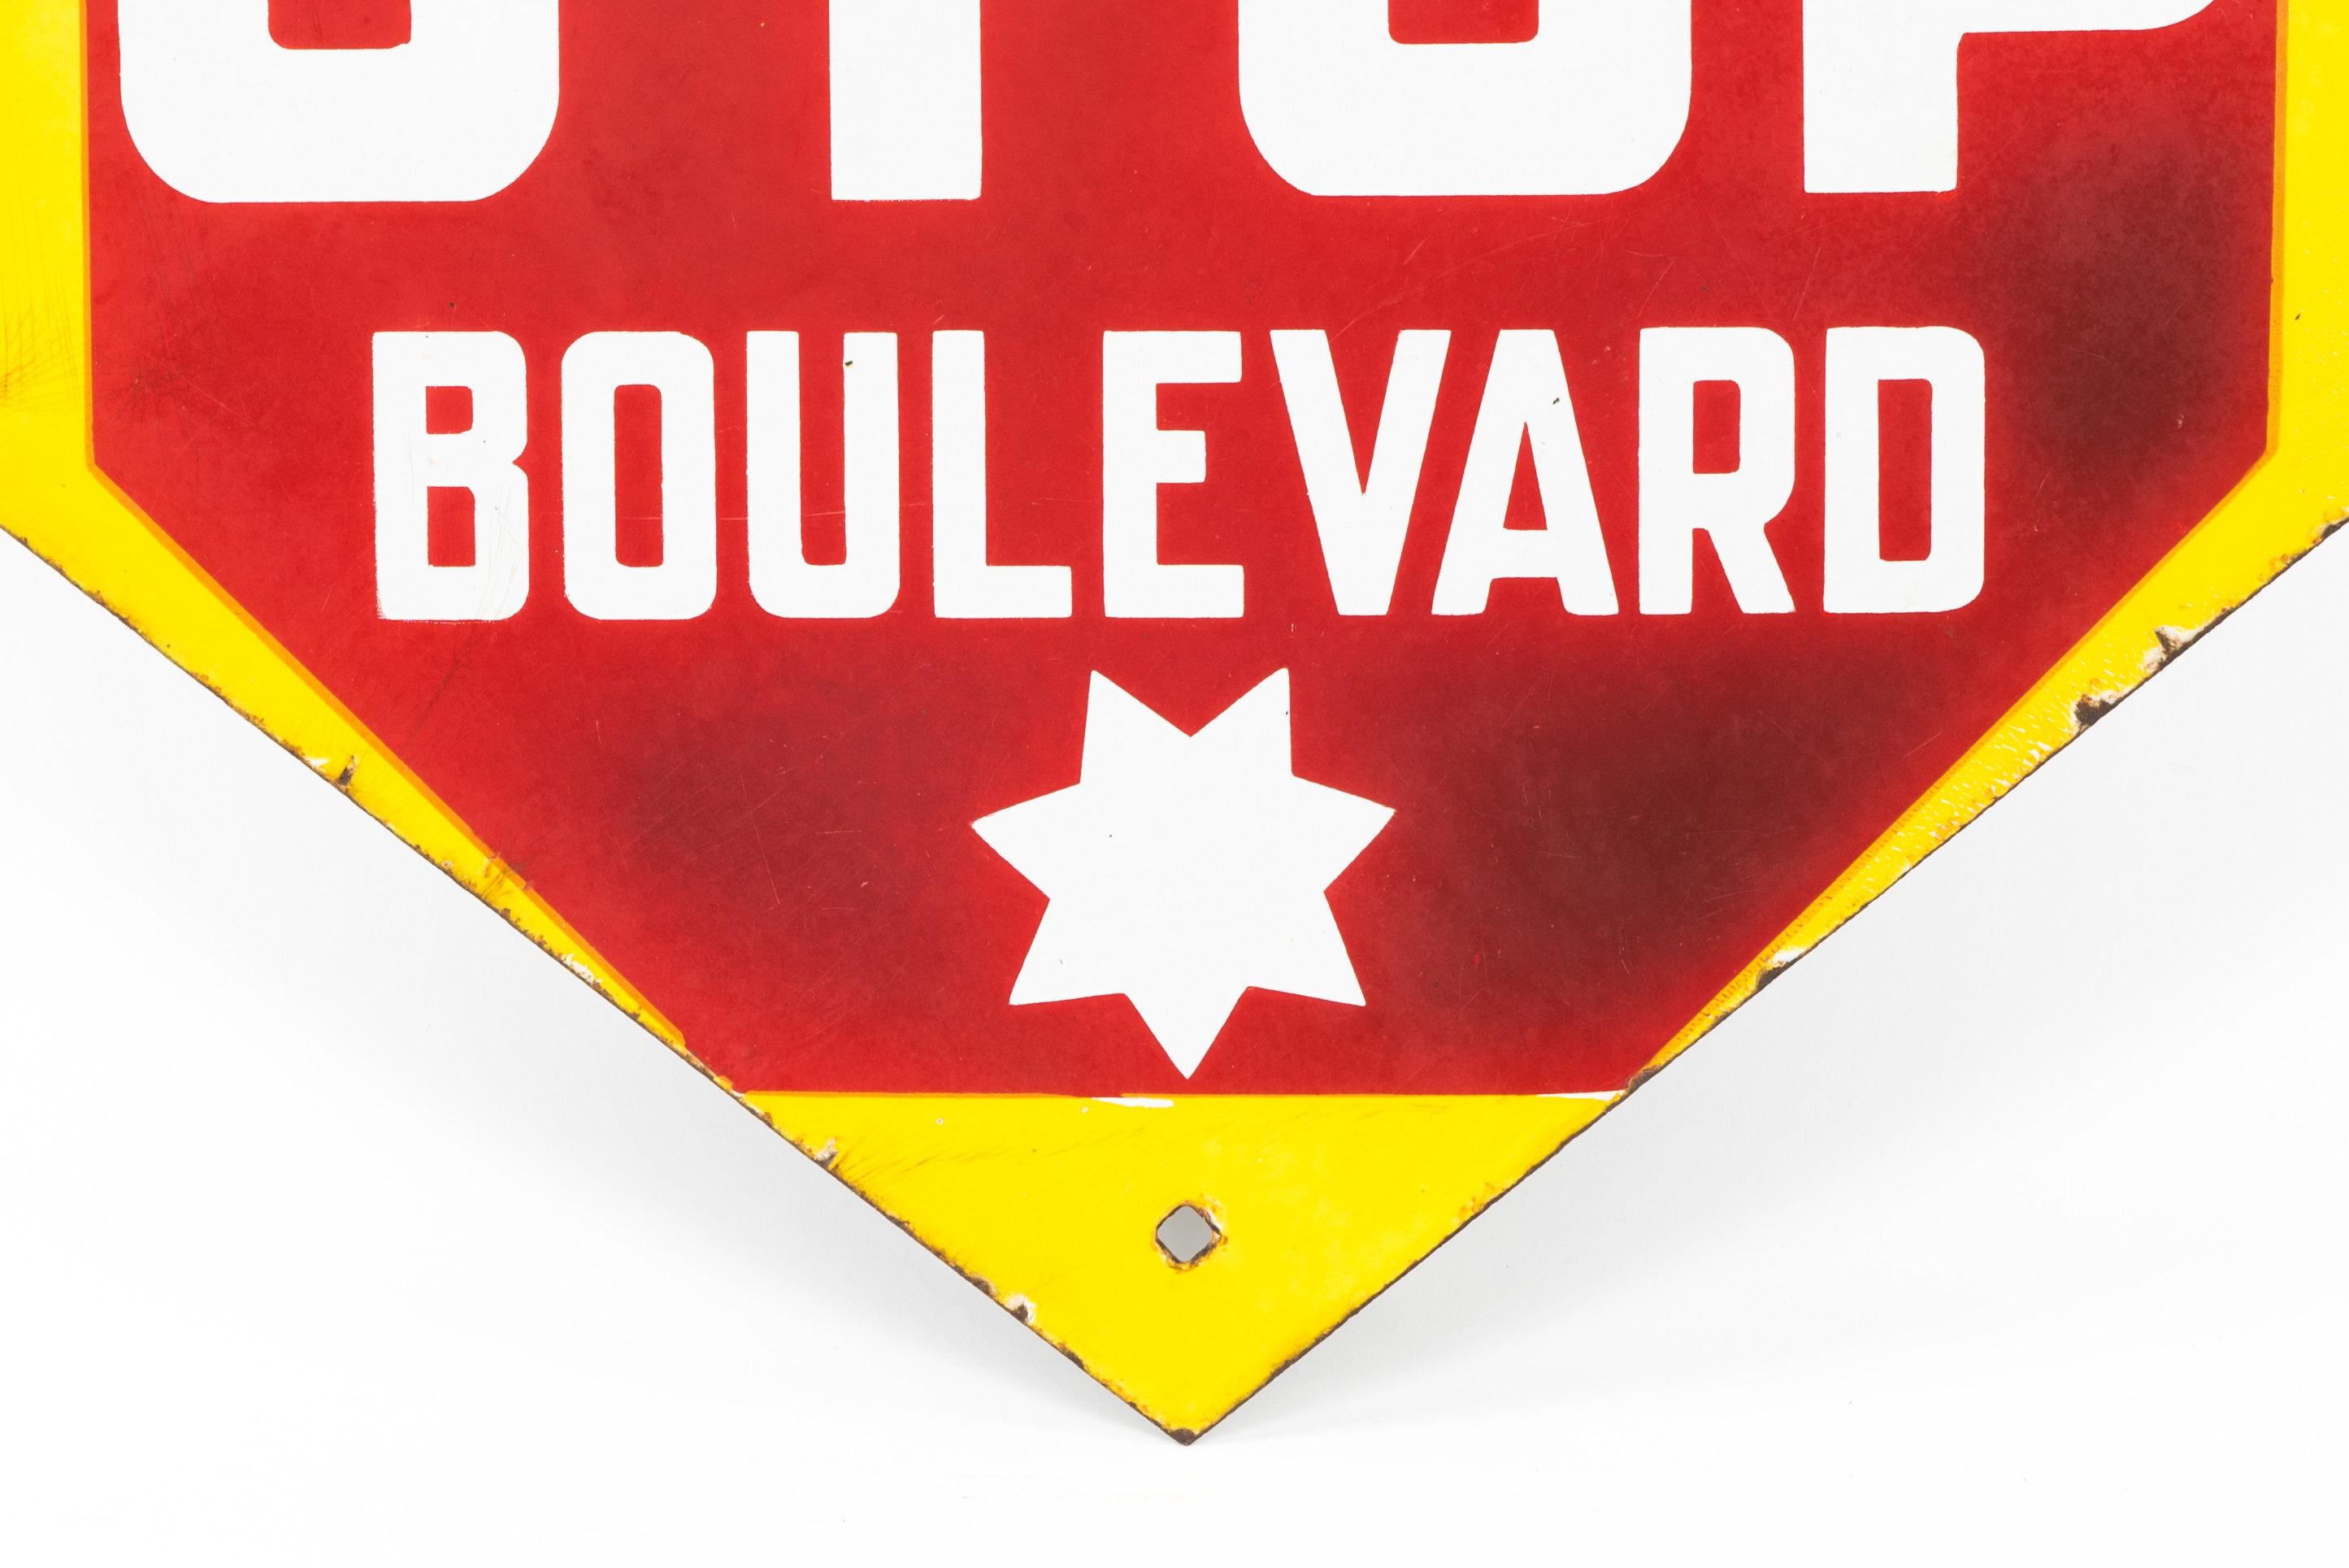 Stop Boulevard Porcelain Traffic Sign